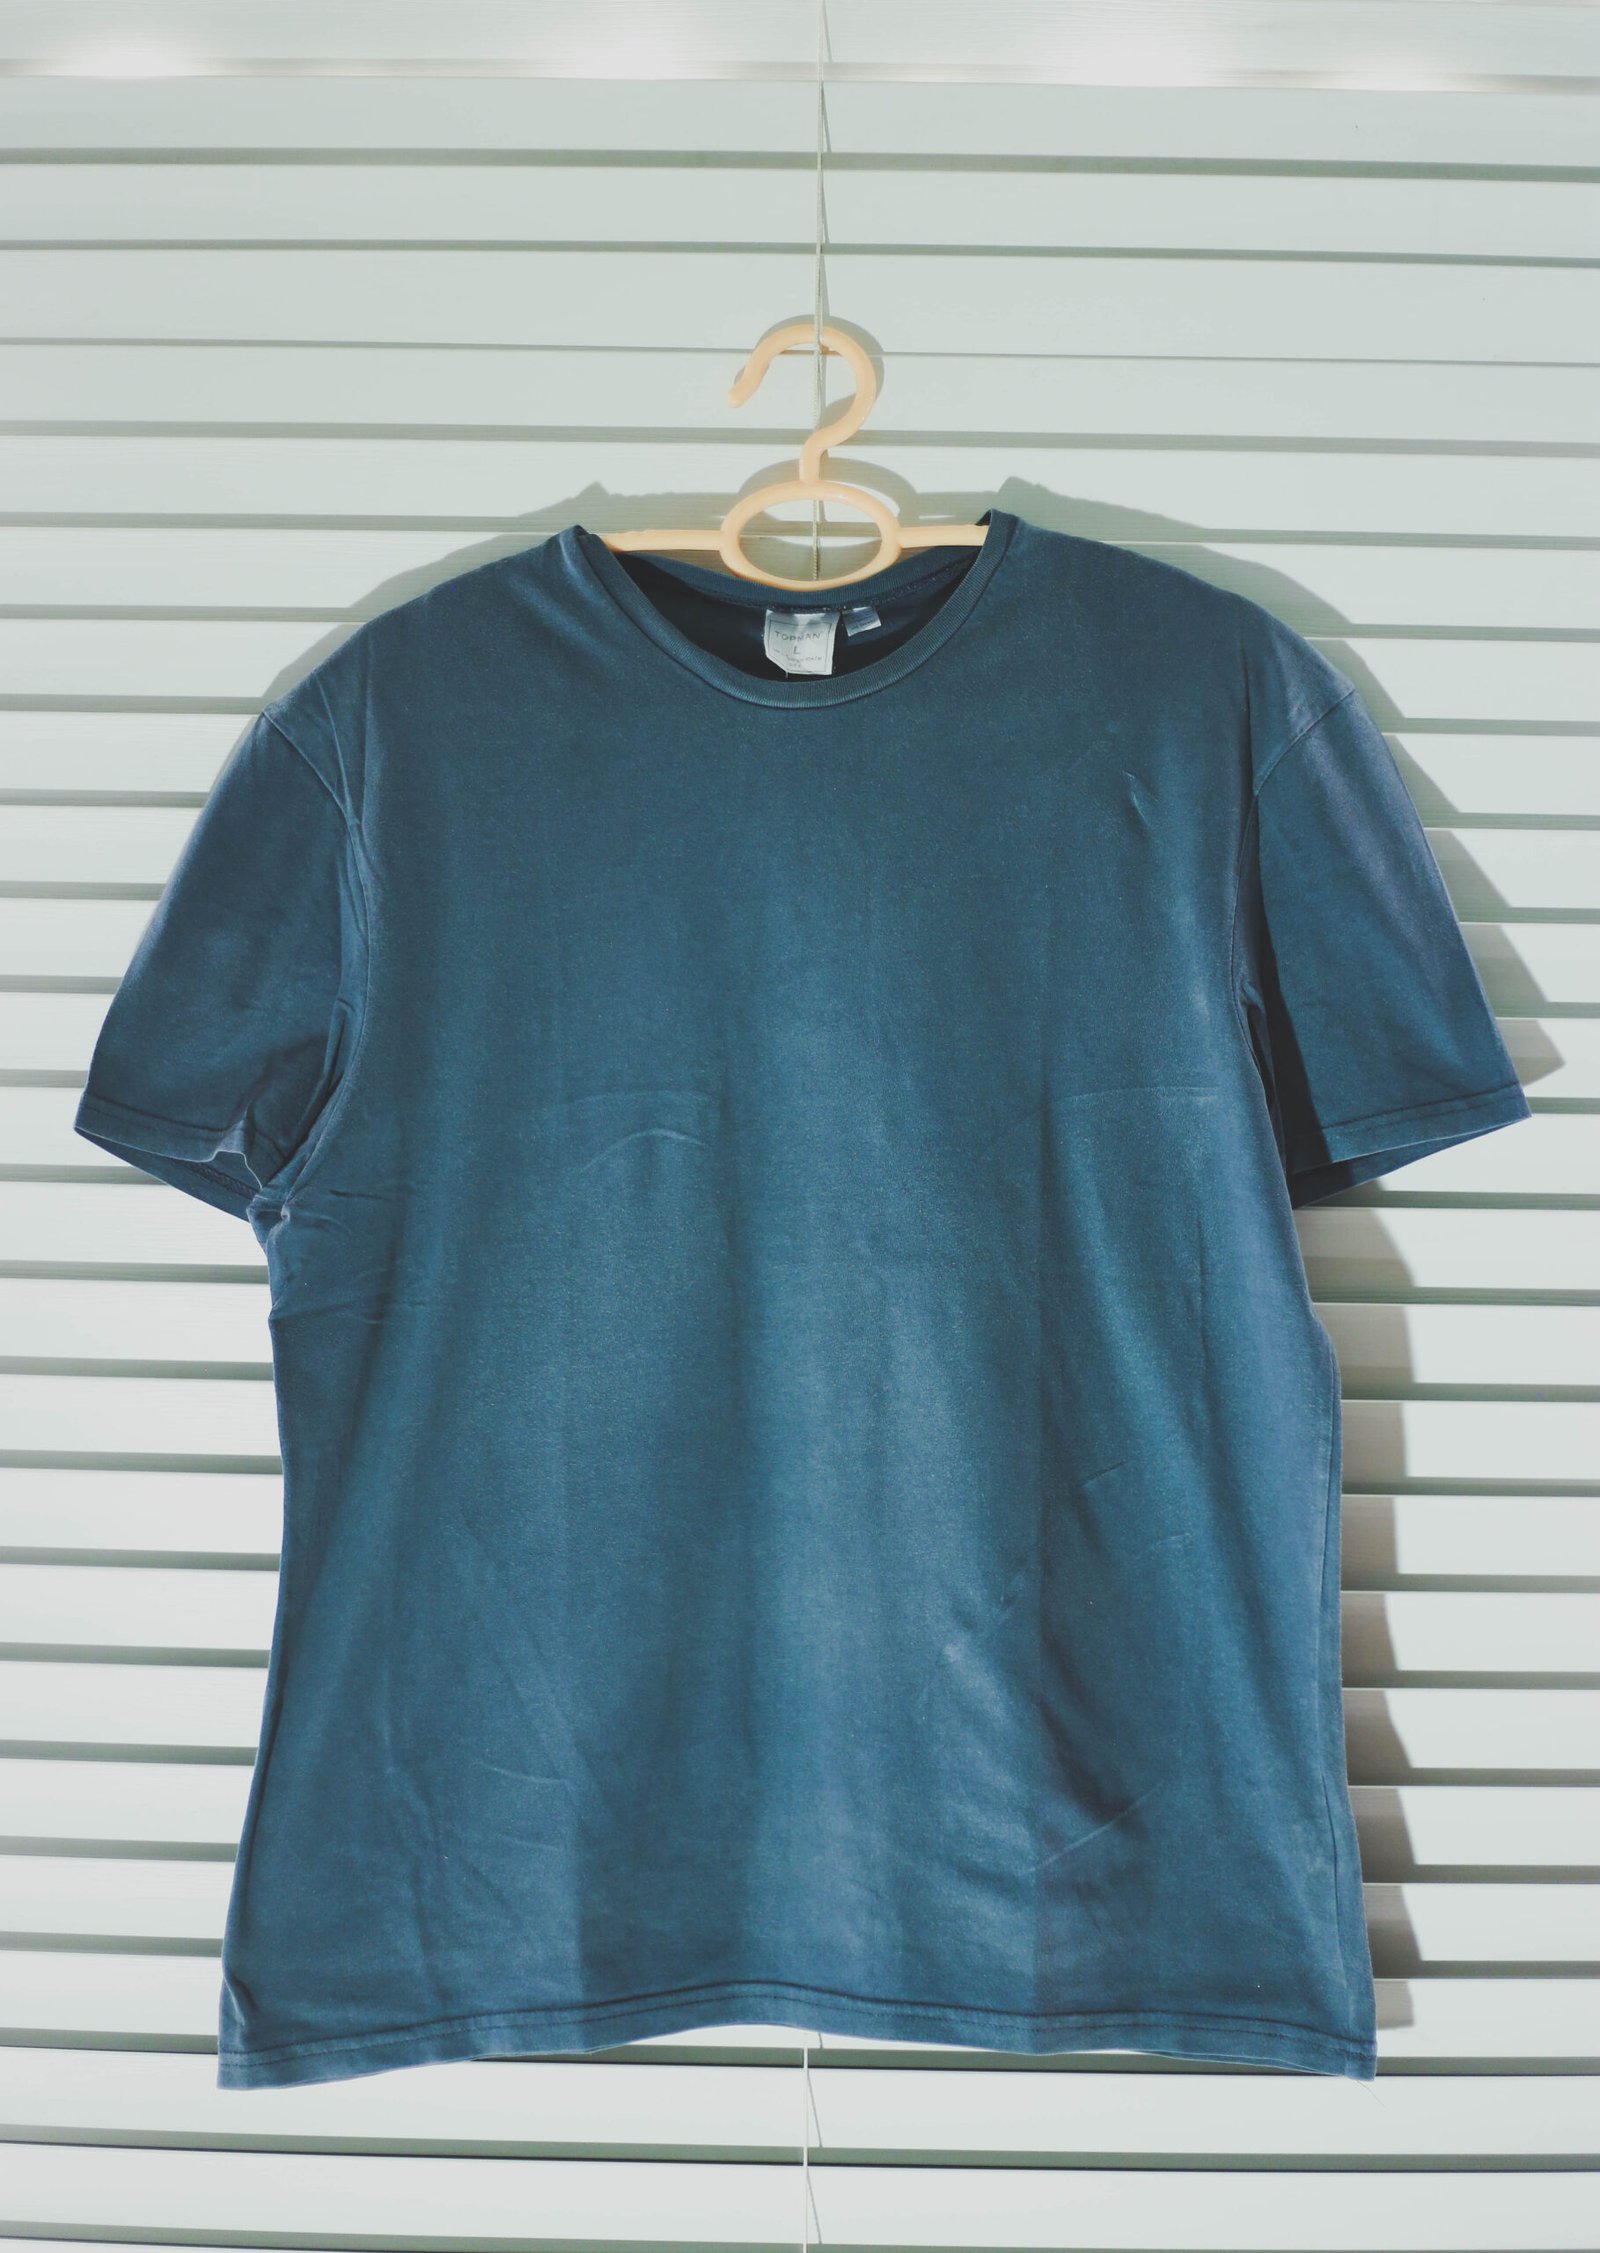 Topman - Premium Sea Blue T-Shirt | Large - Lunda.pk - Sasta - Saaf - Sutra